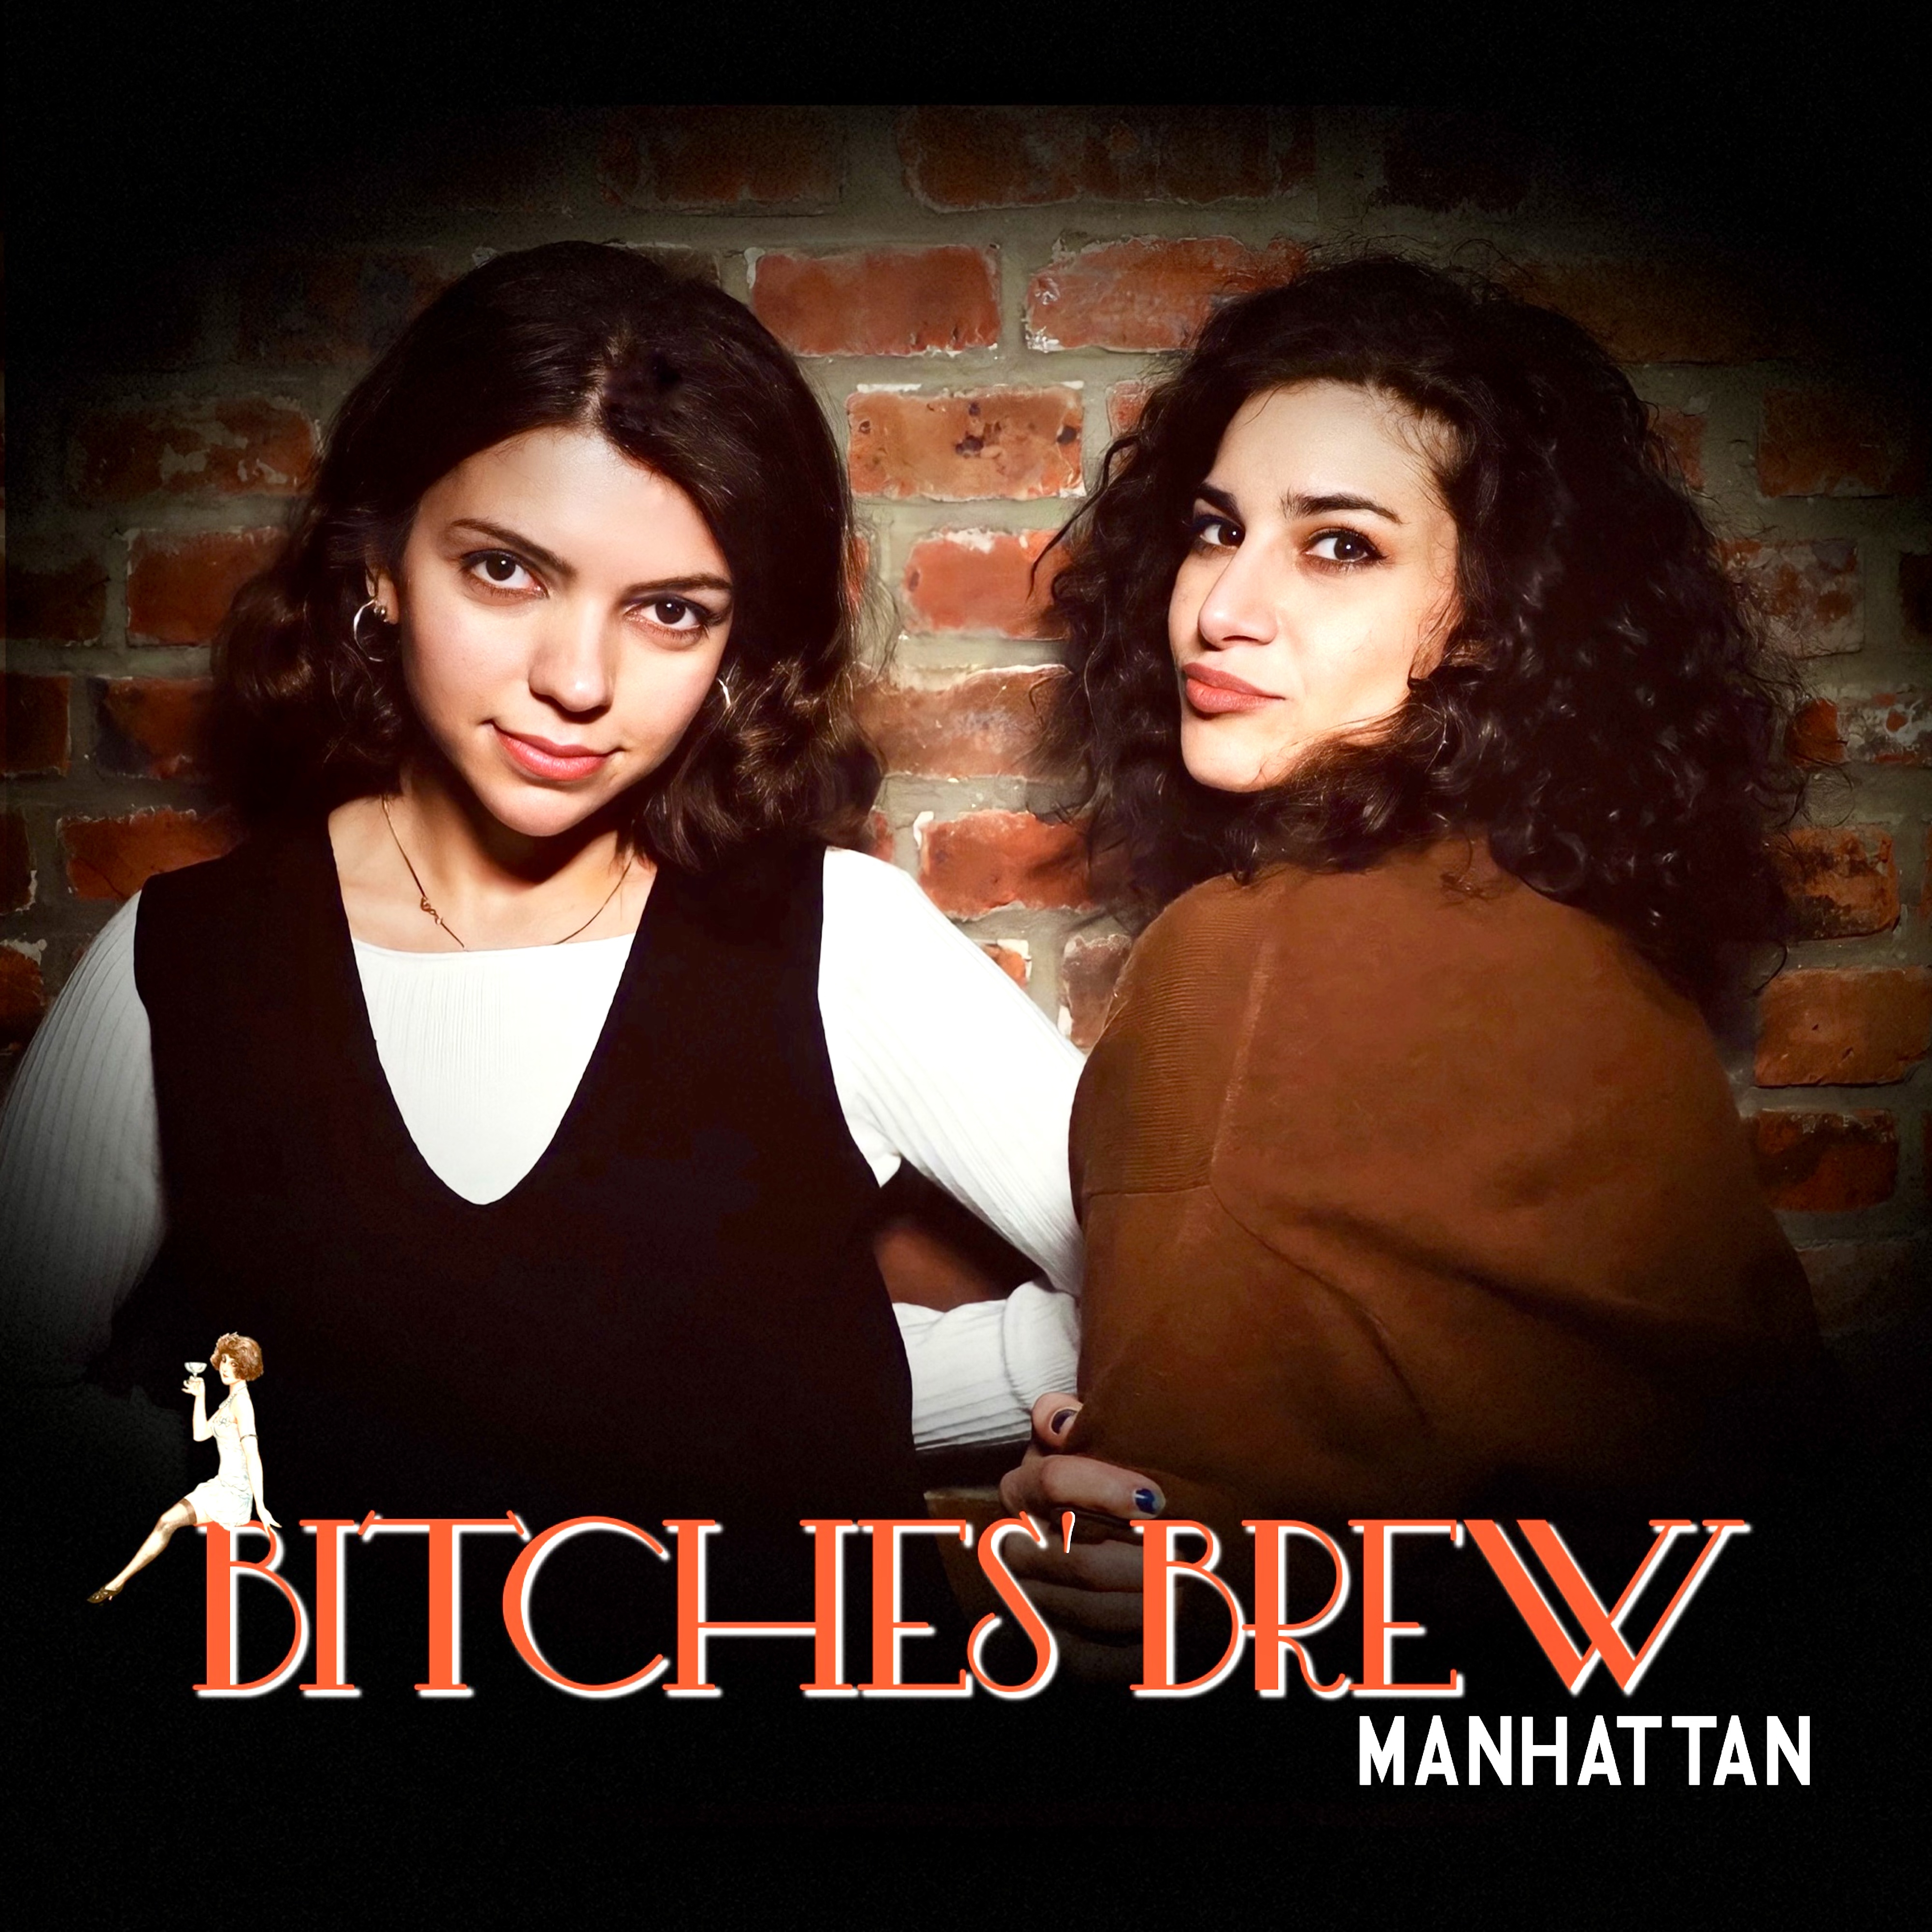 Bitches’ Brew